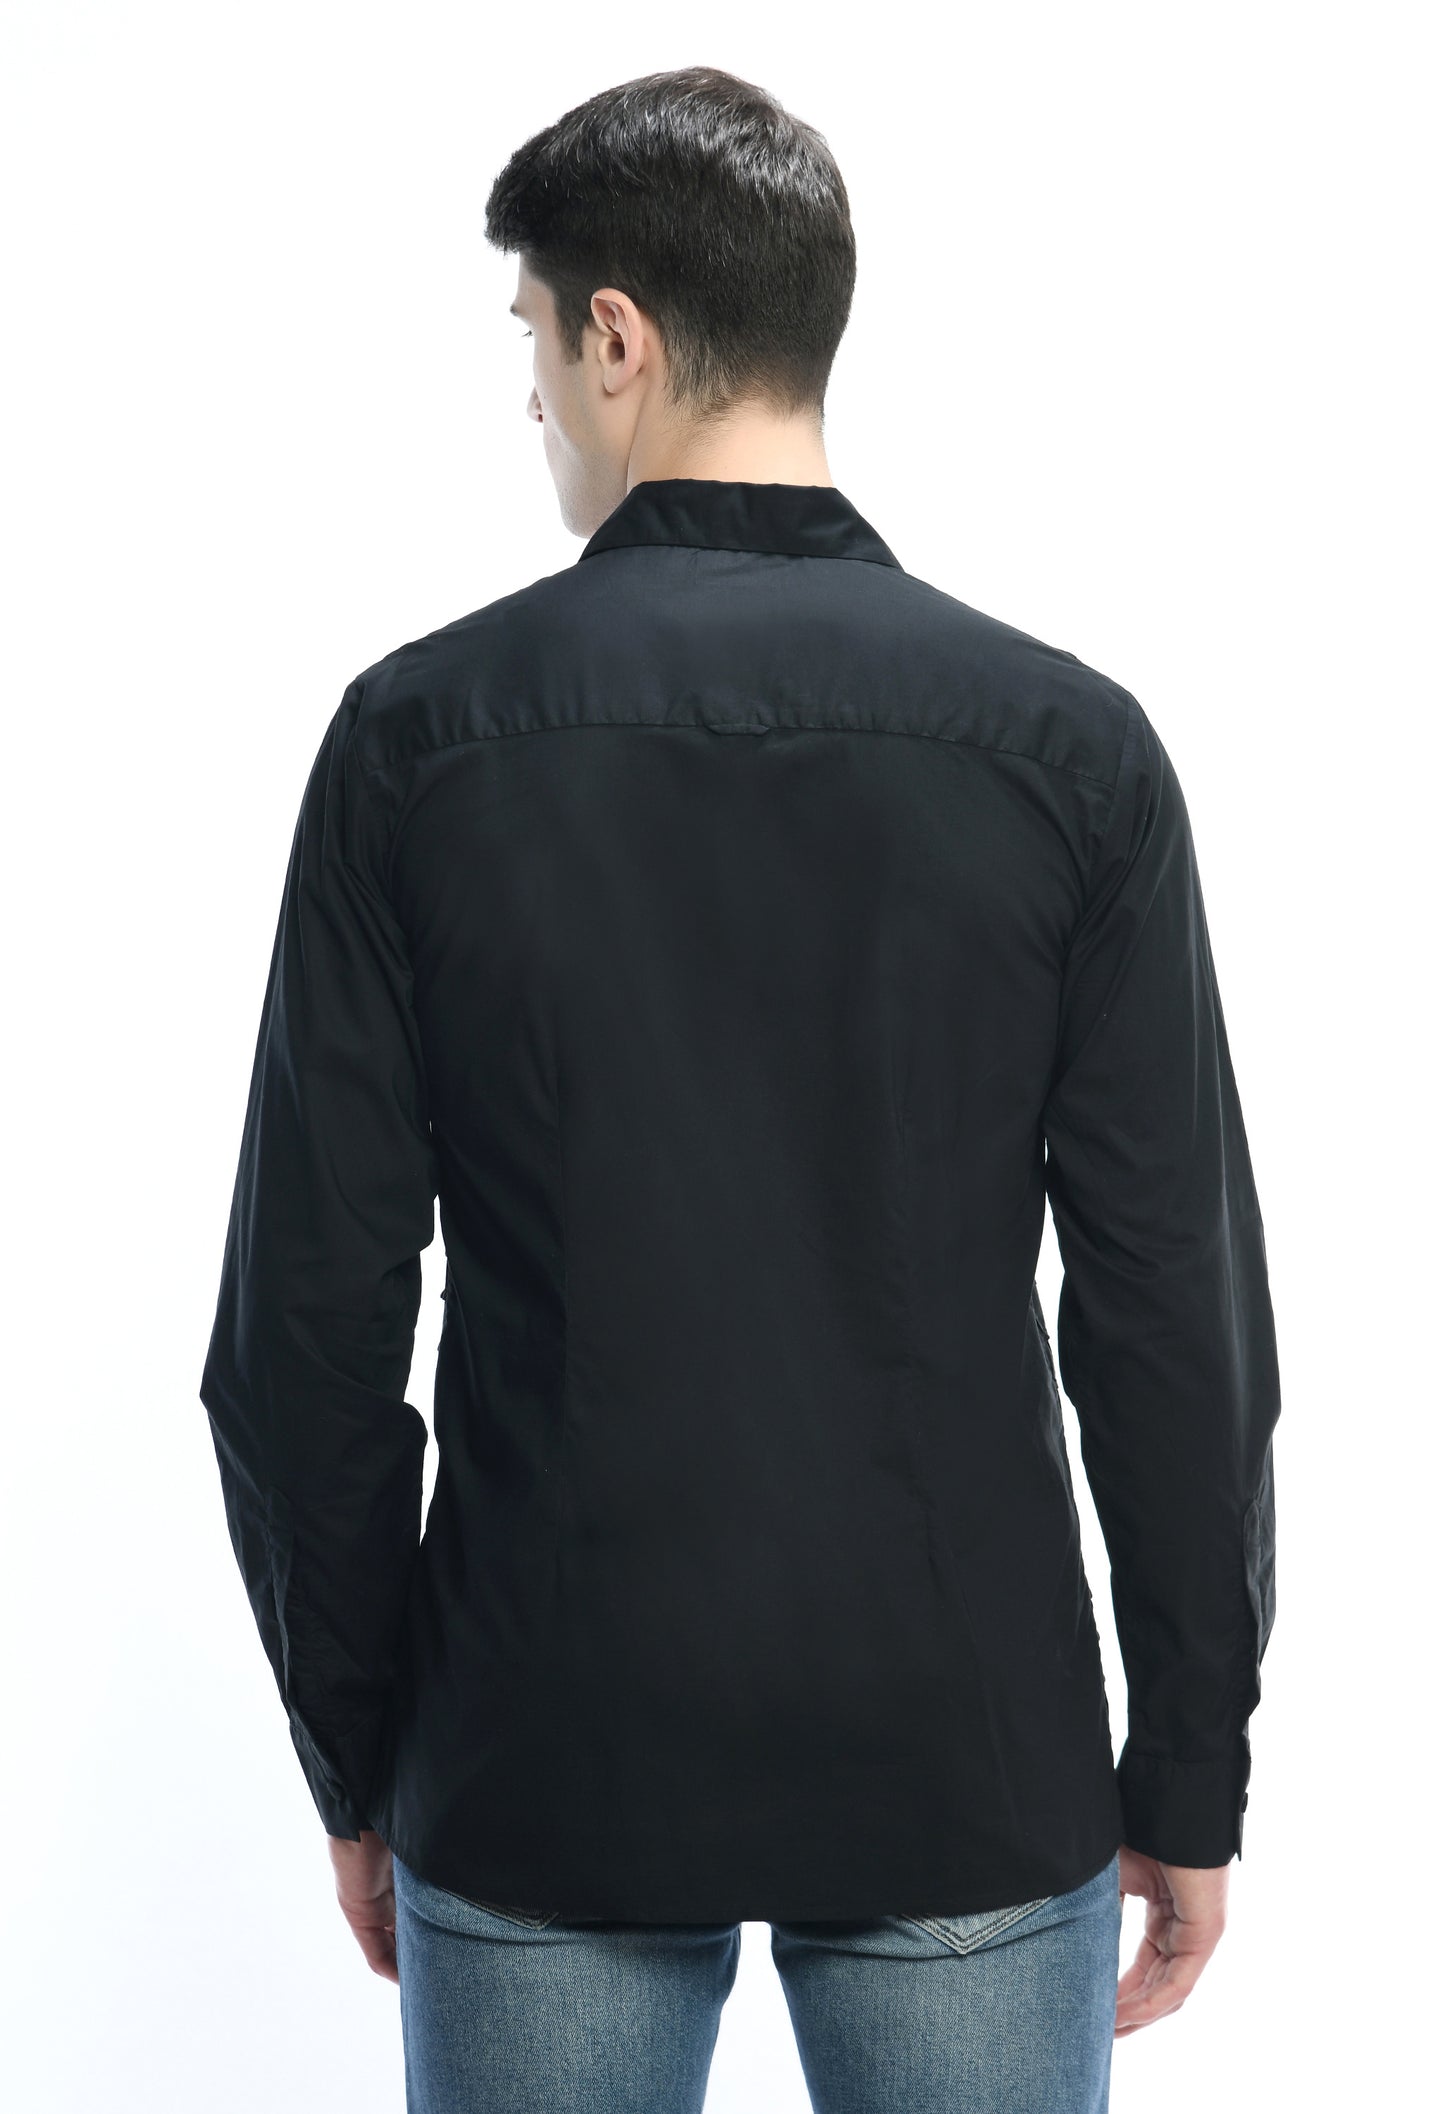 A black cotton shirt showcasing pintex lines creating a tone on tone pattern.